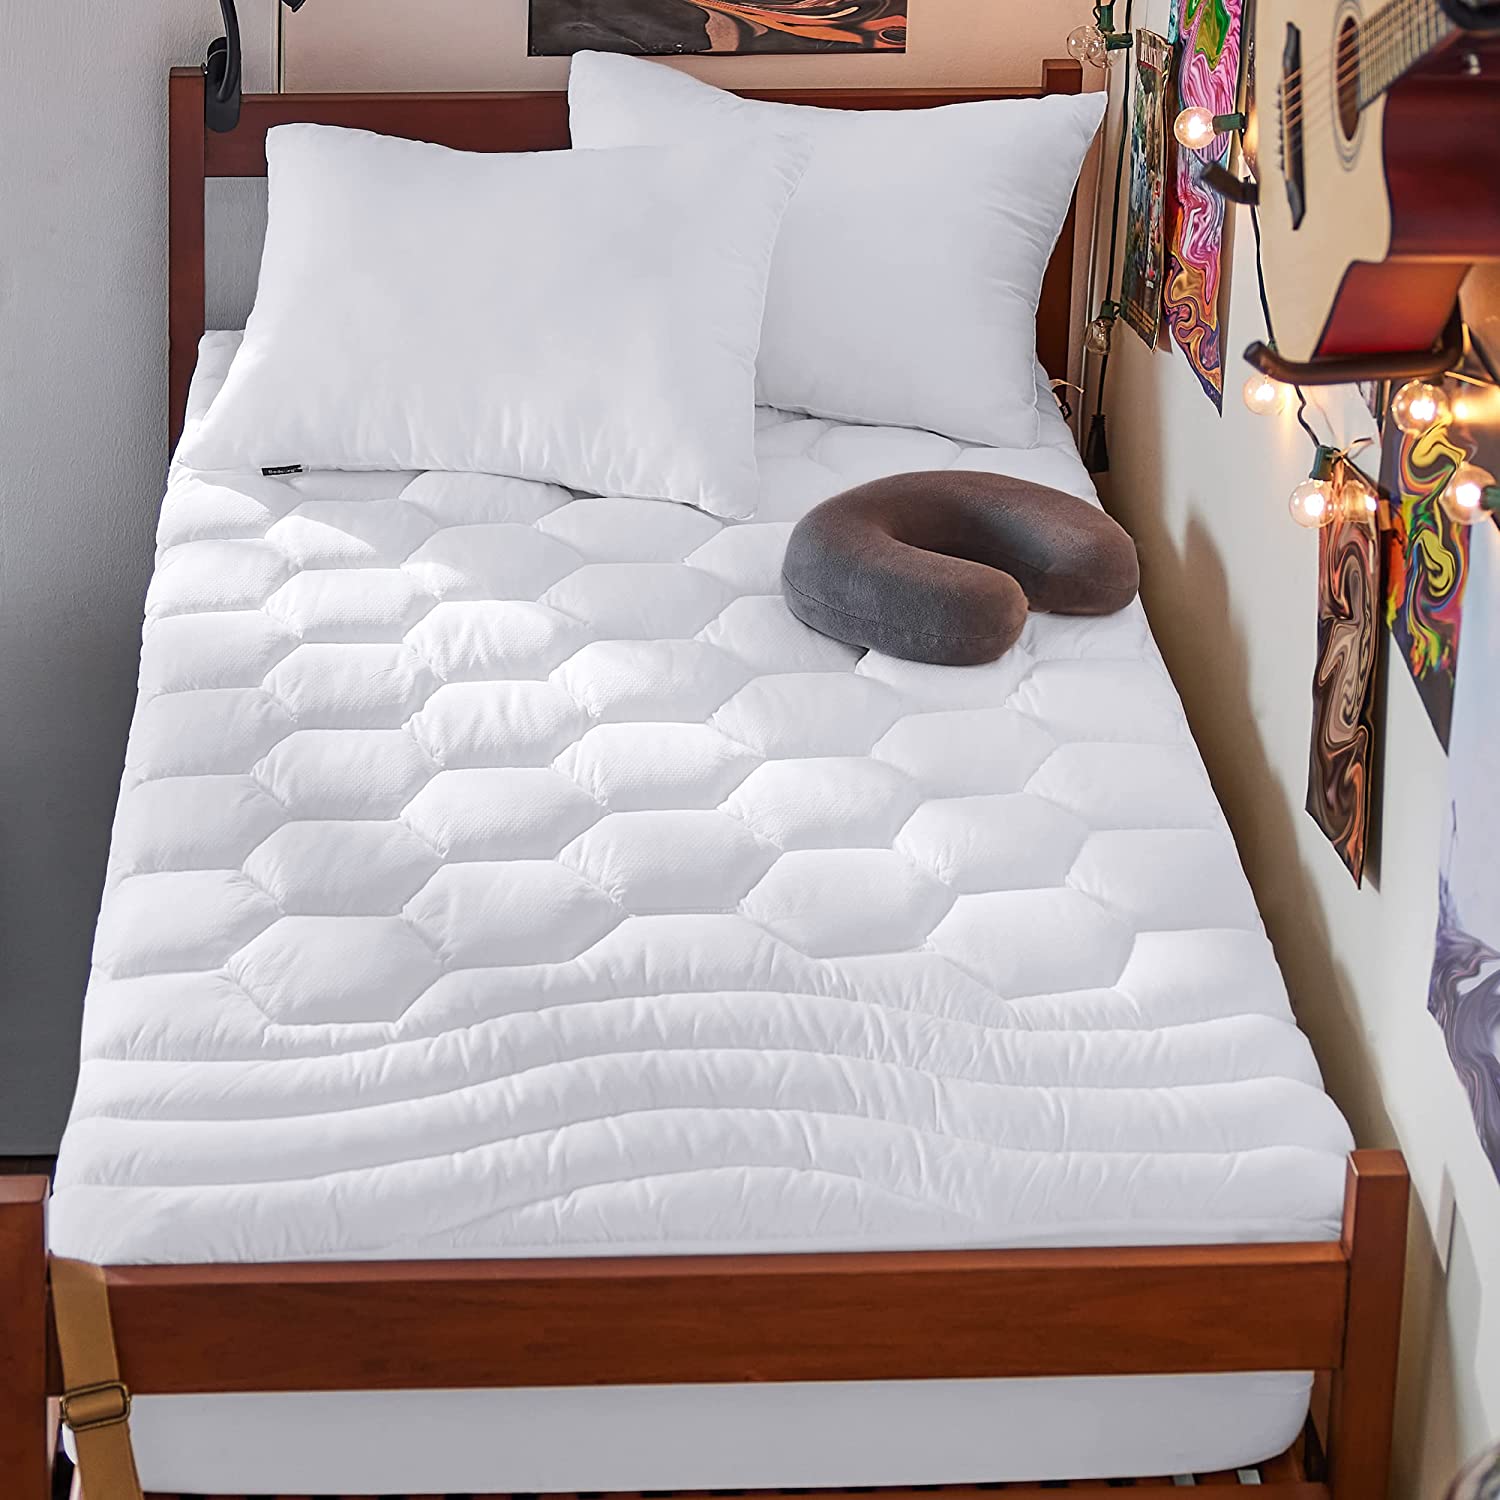 Bedsure Quilted Twin XL Mattress Topper Dorm Room Essential